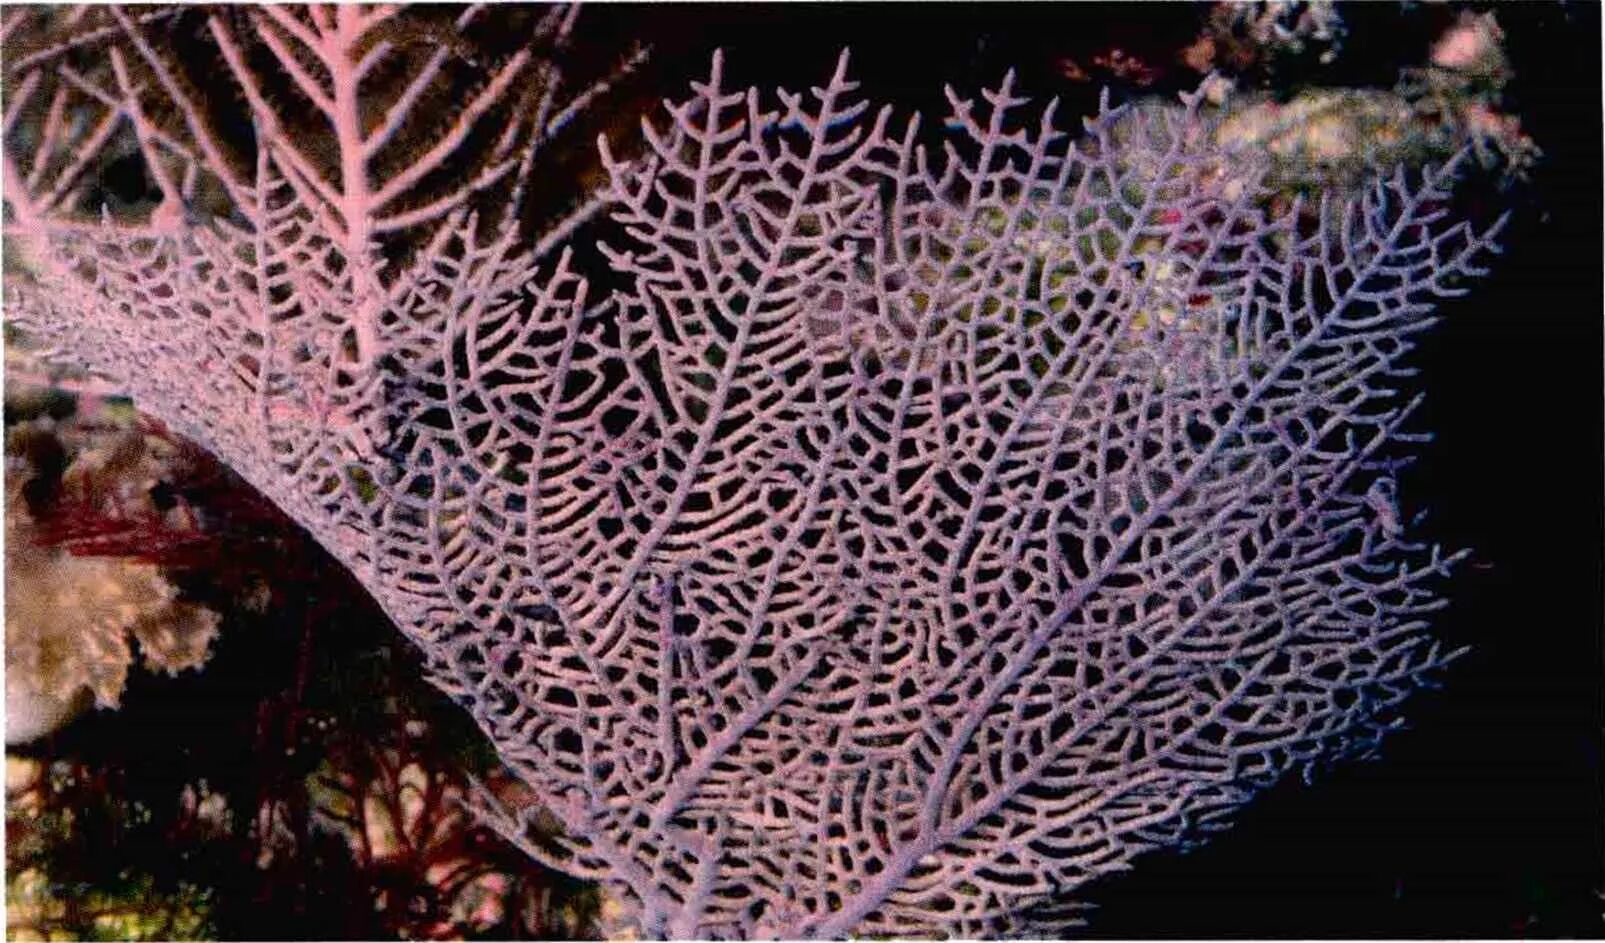 Gorgonia ventalina. Gorgonia Flabellum. Коралловые полипы горгонарии. Коралл, Тип Gorgonia.